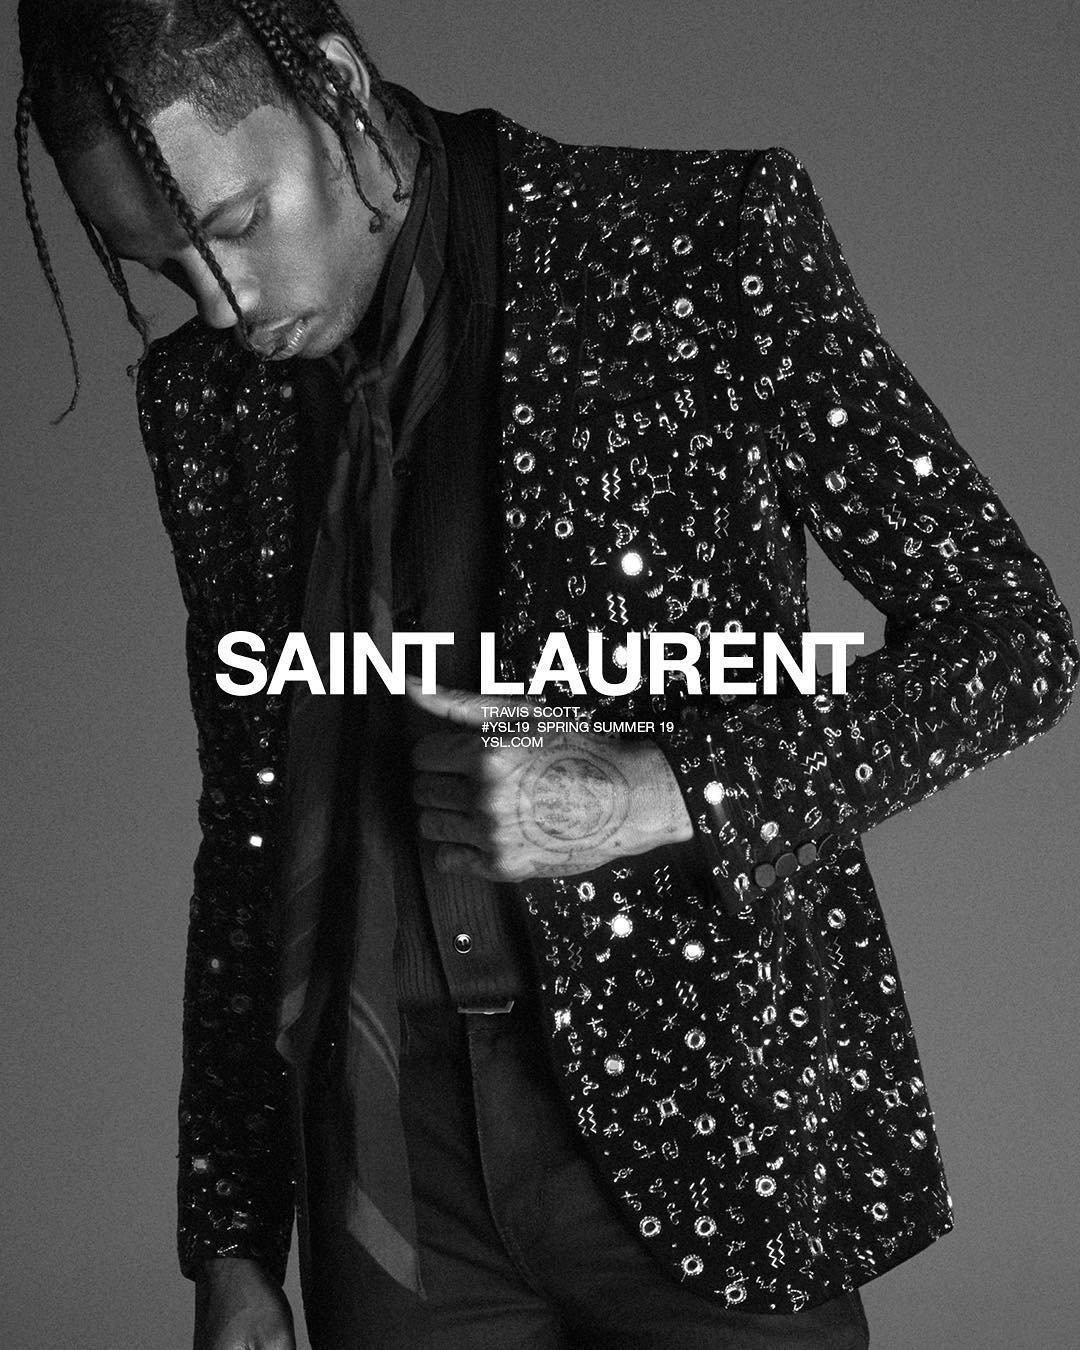 Трэвис Скотт в рекламной кампании Saint Laurent, весна-лето 20219